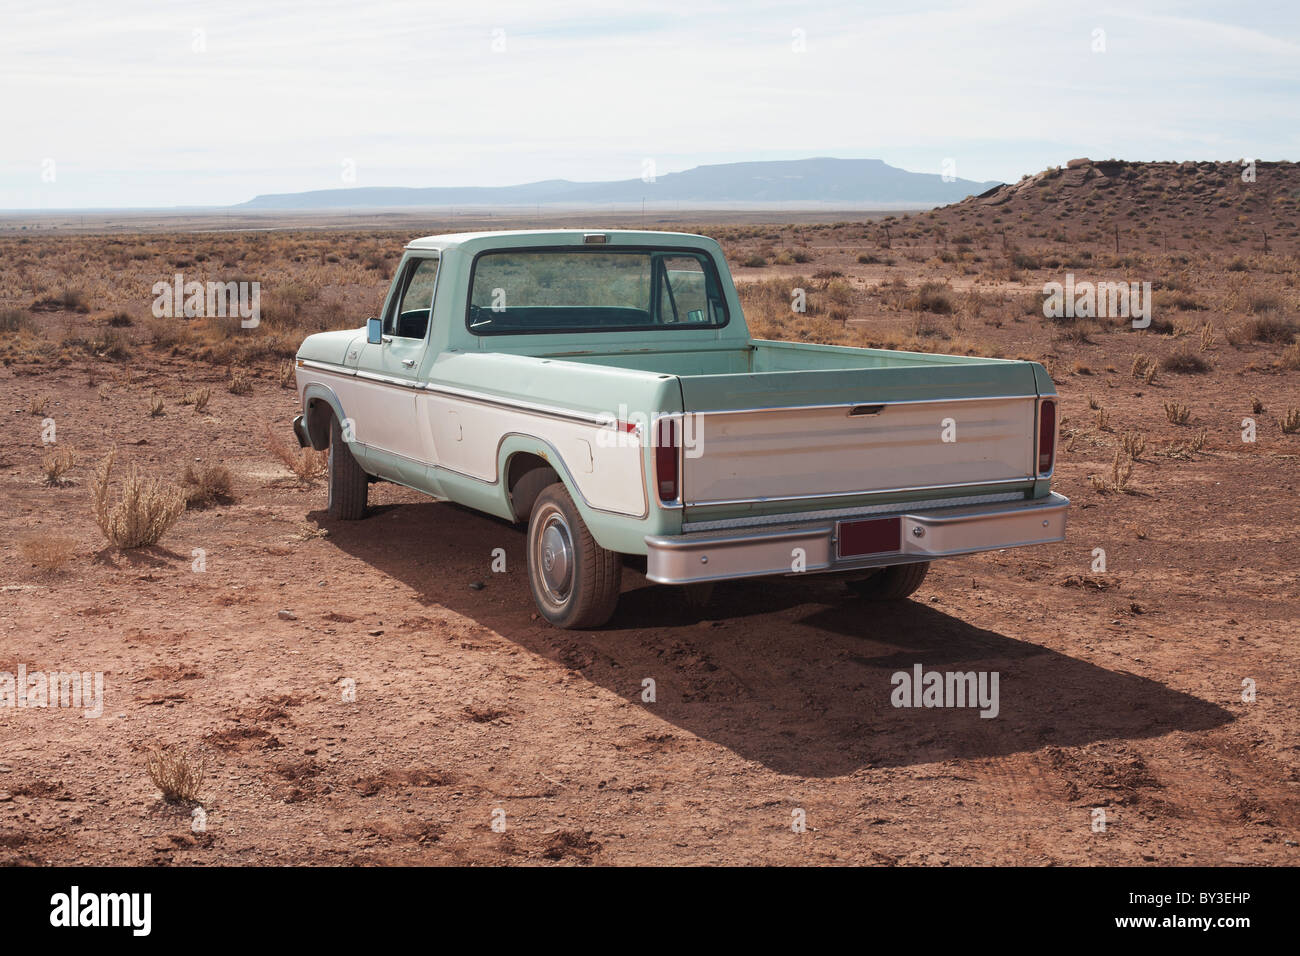 USA, Arizona, Winslow, Pick-up truck on desert Stock Photo